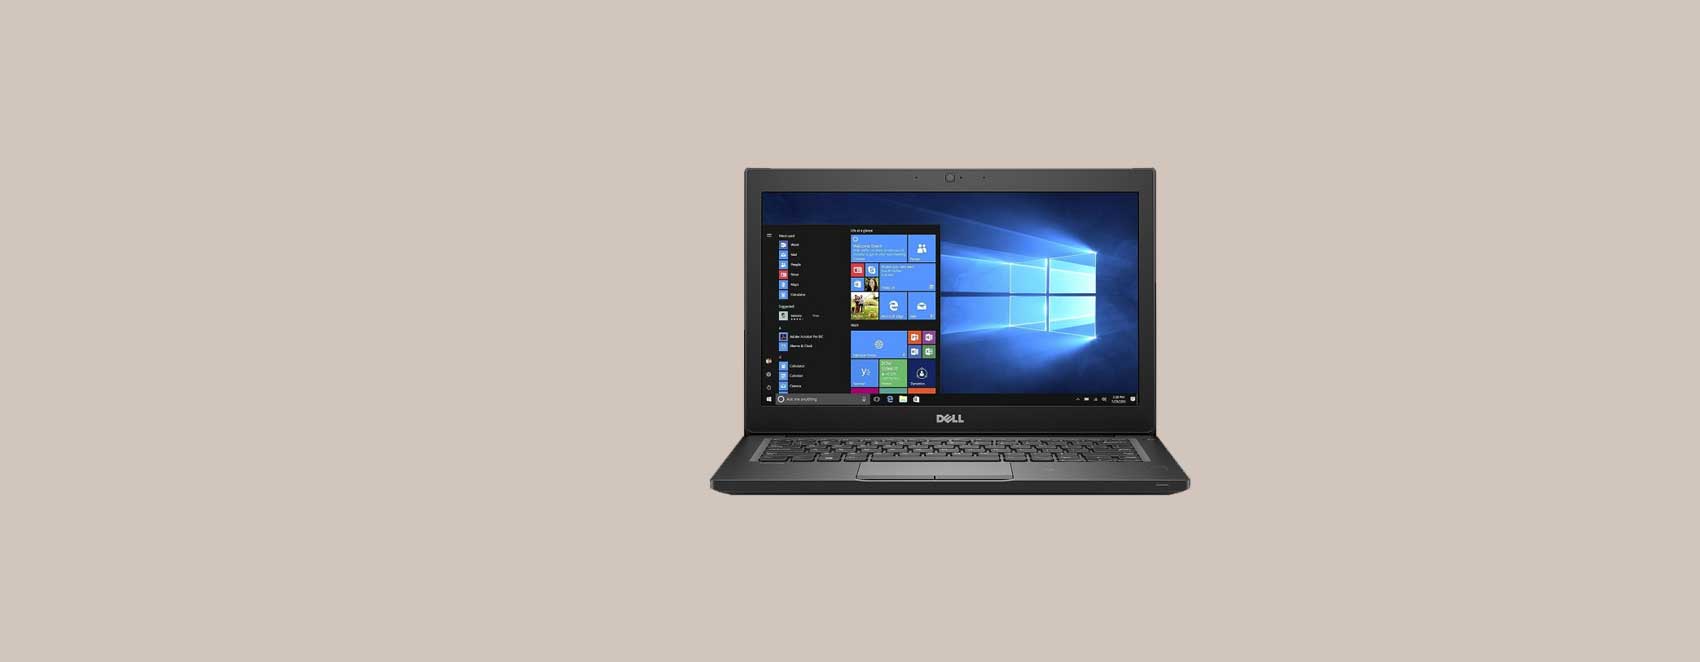 Windows 10 Laptops